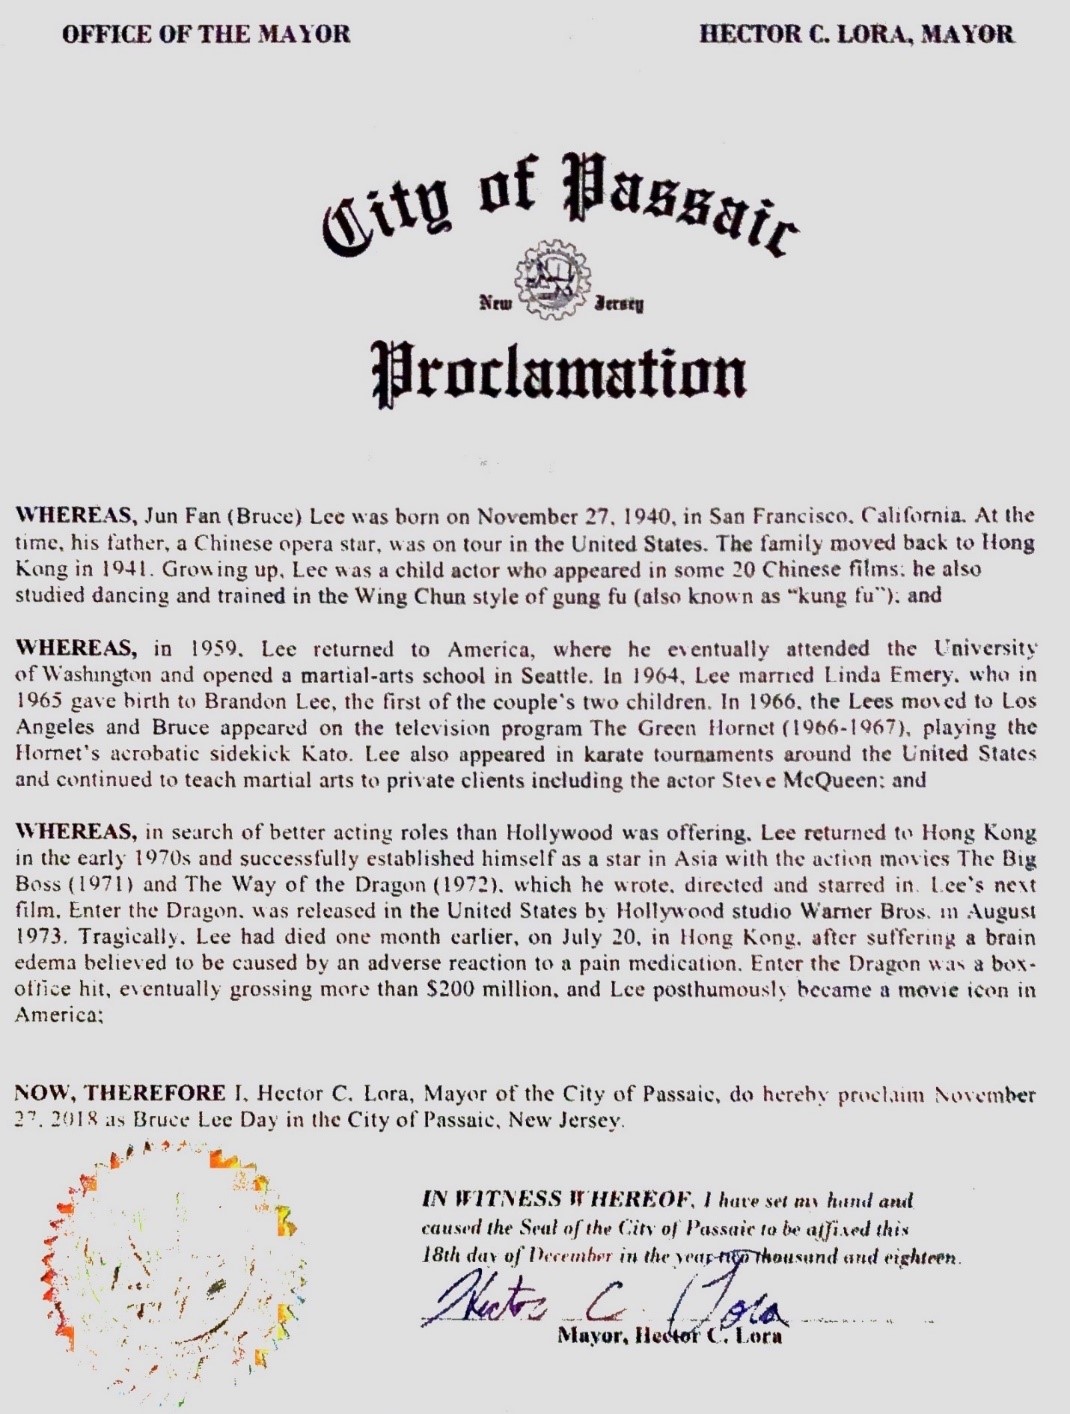 Passaic Proclamation